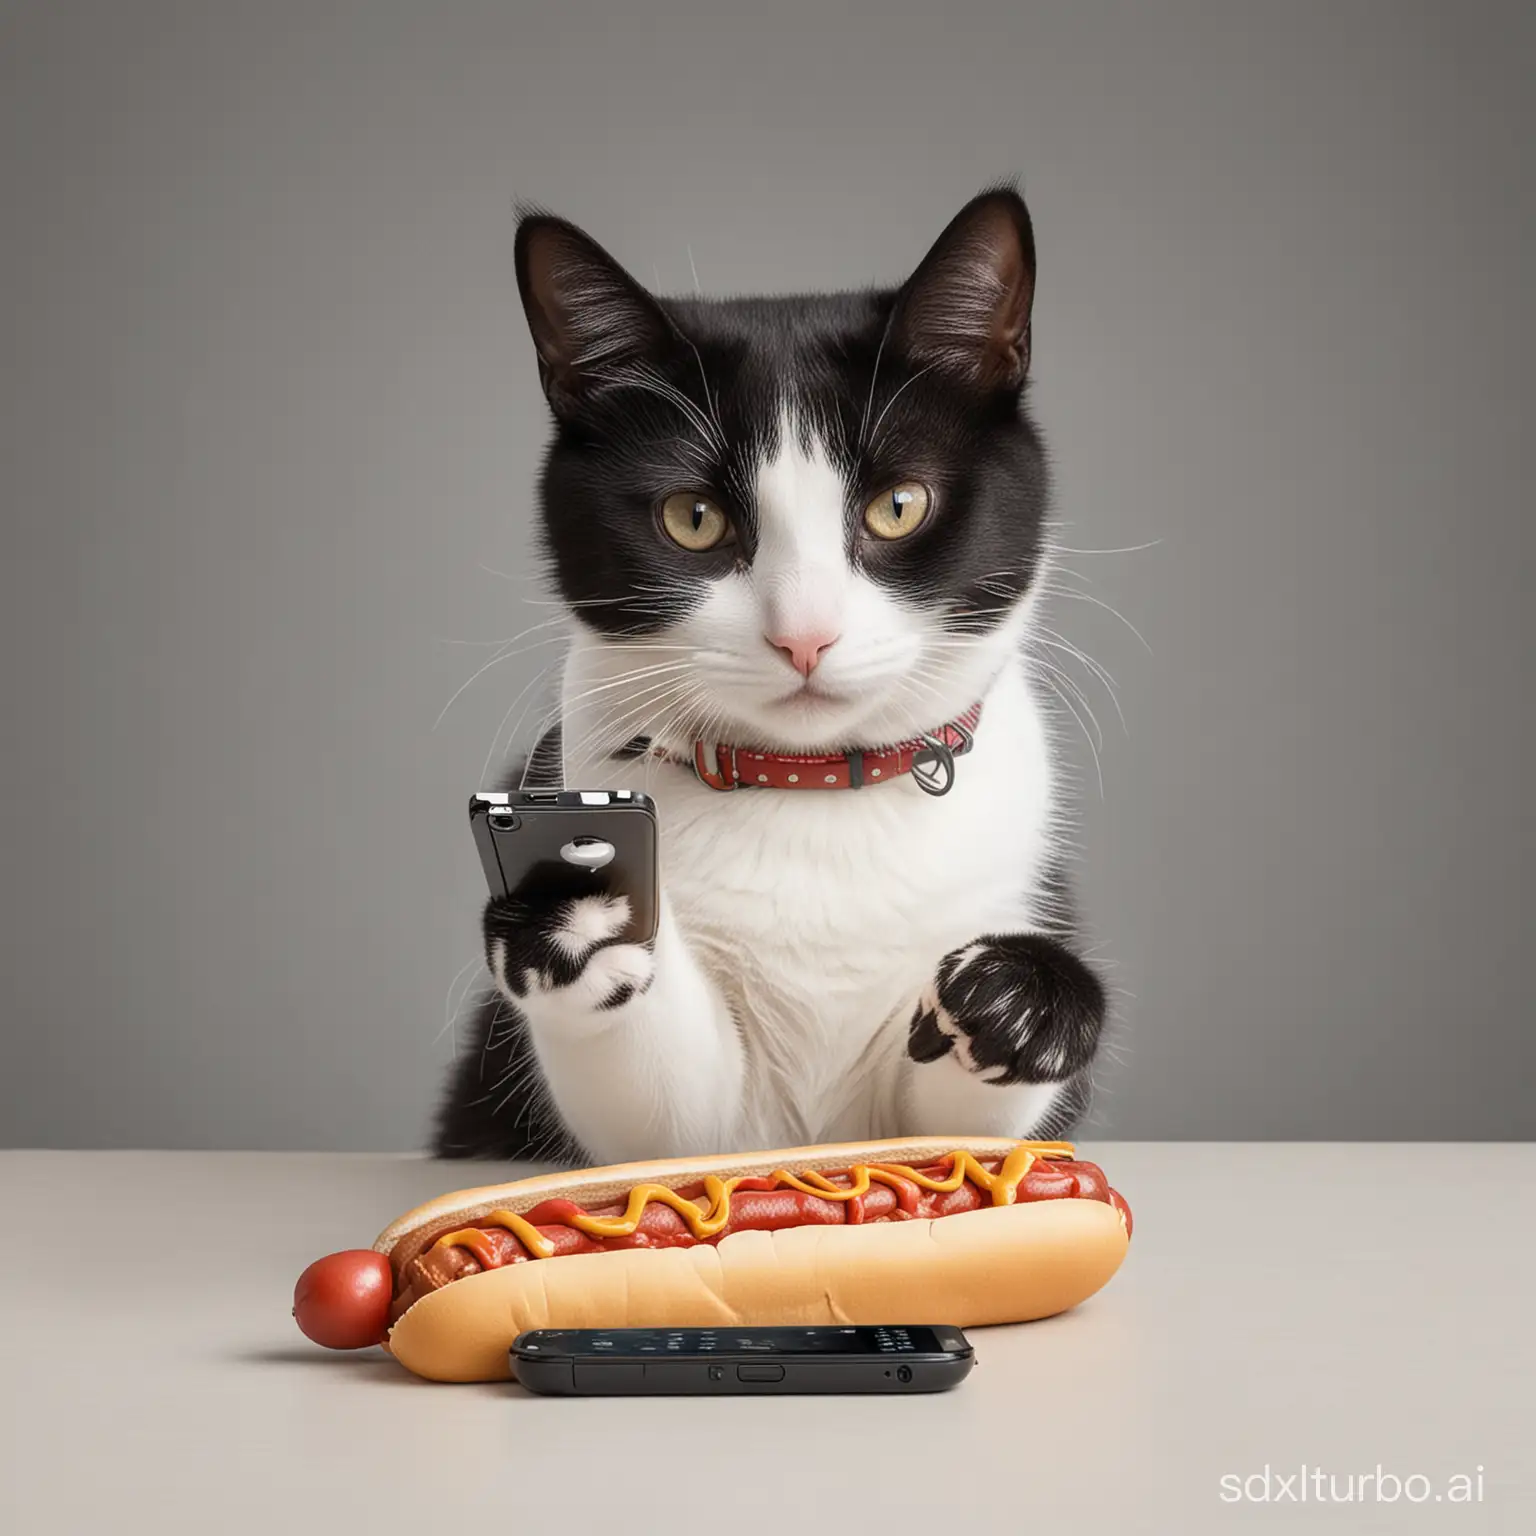 Monochrome-Cat-with-Smartphone-and-Hotdog-Snack